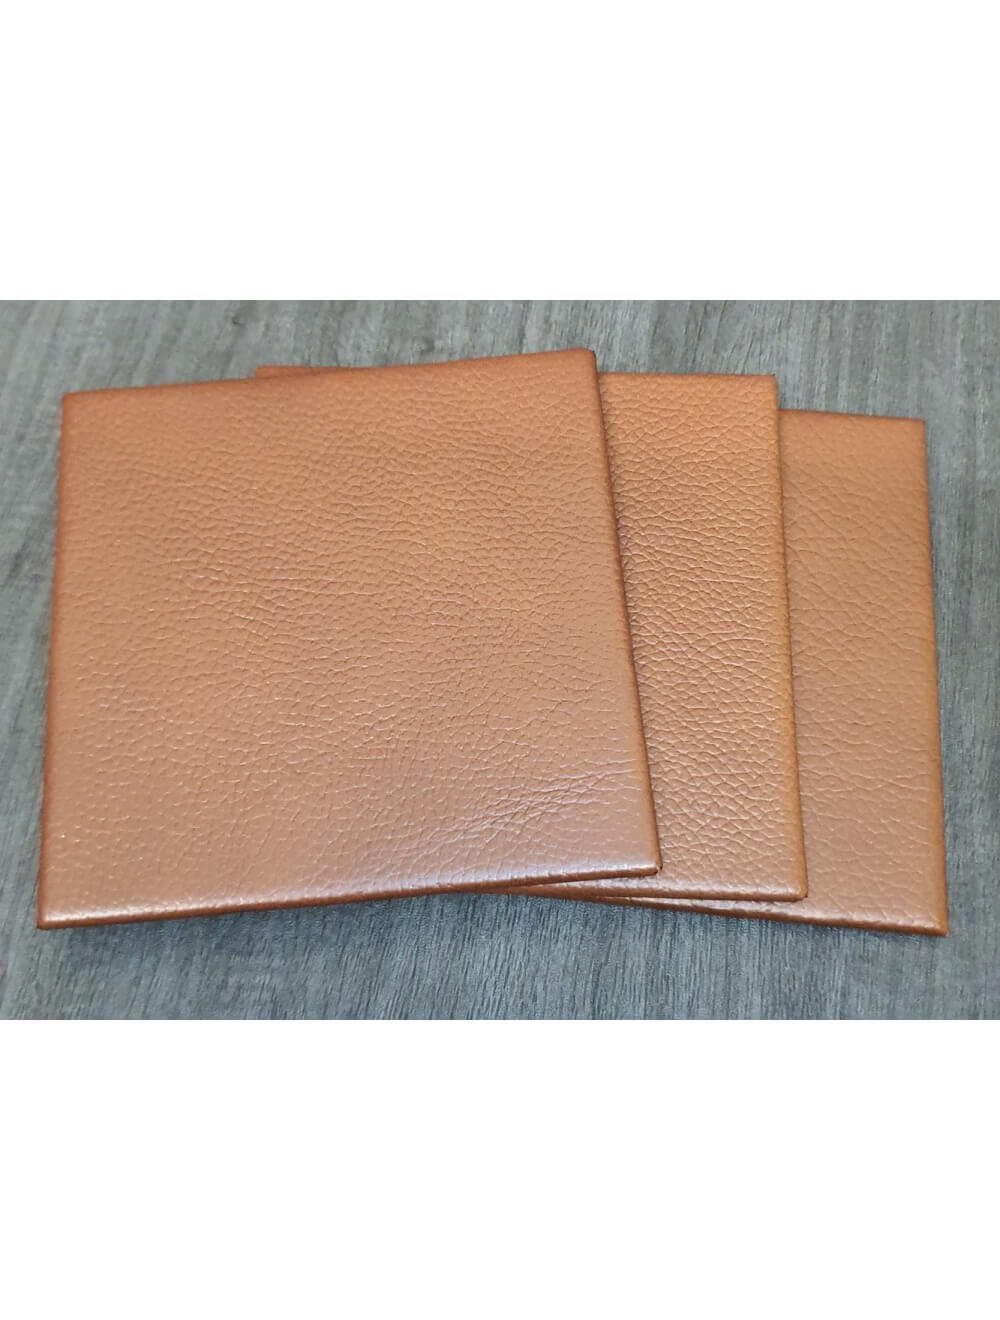 Castagna Shelly Leather Coaster - 10cm Sq (myydään)